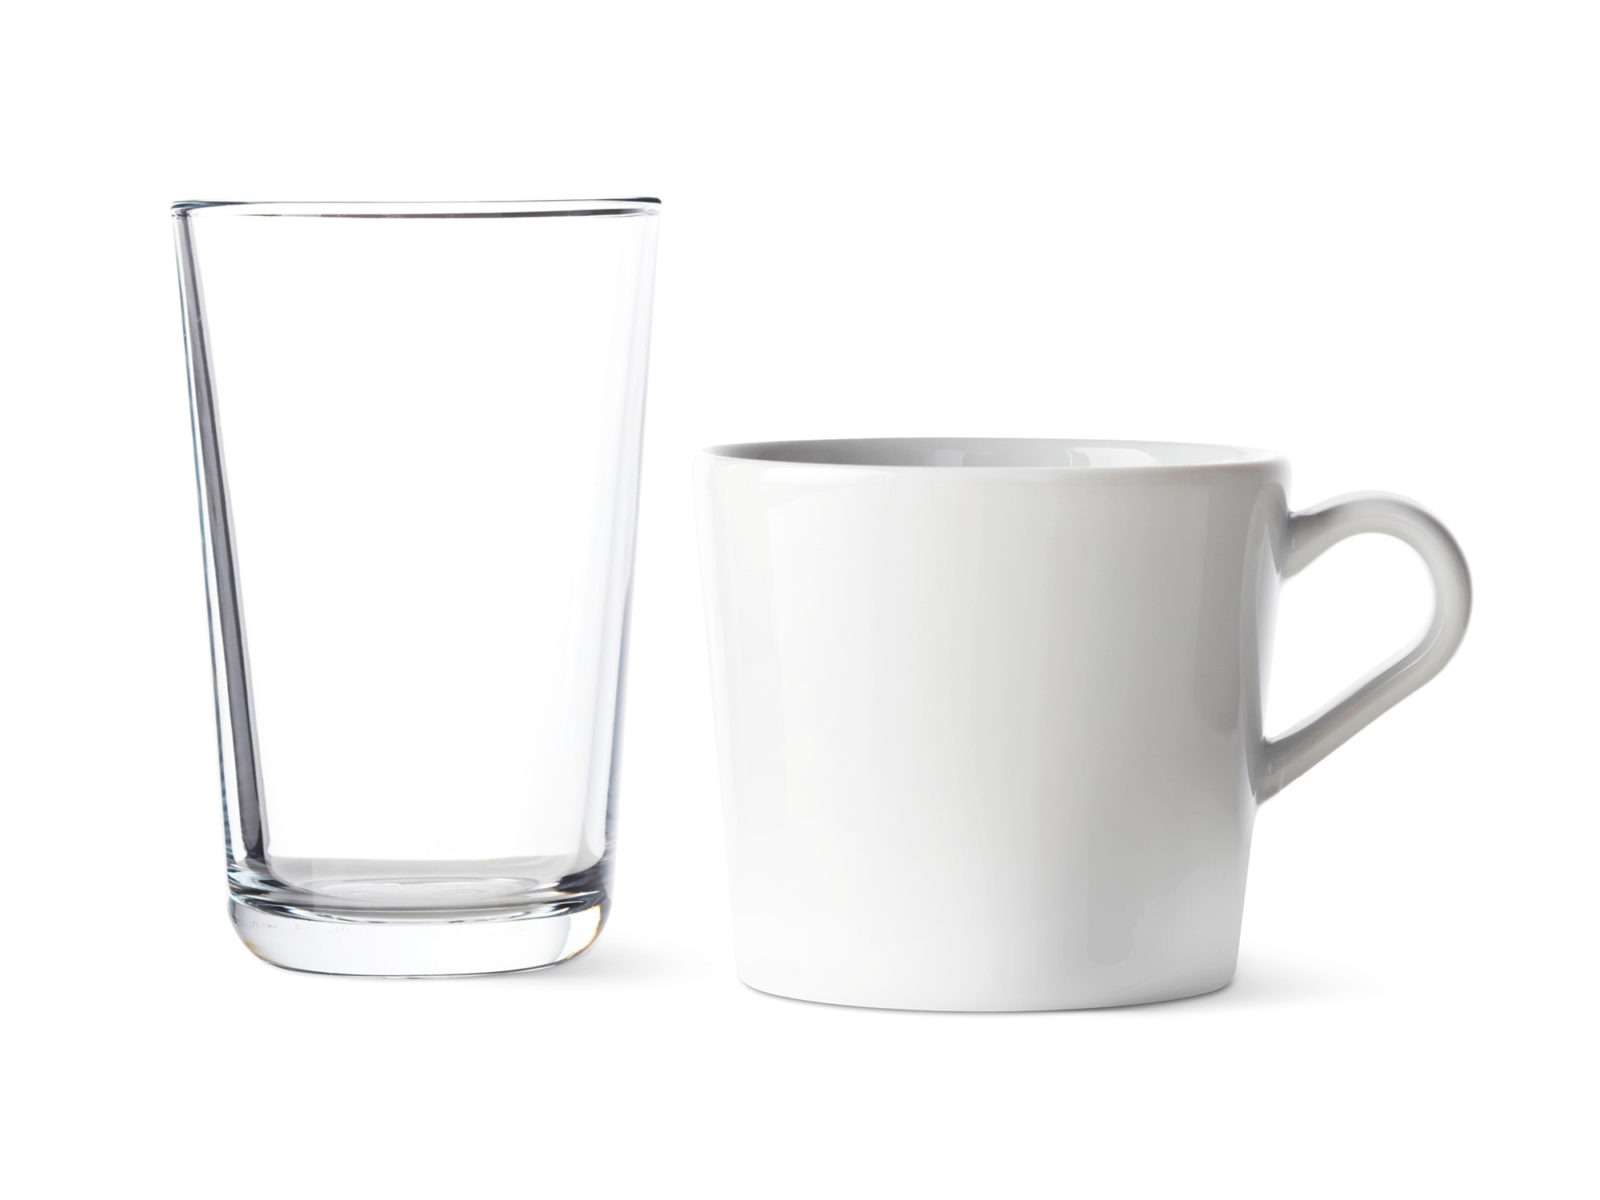 Glas och vit kopp, mot vit bakgrund.